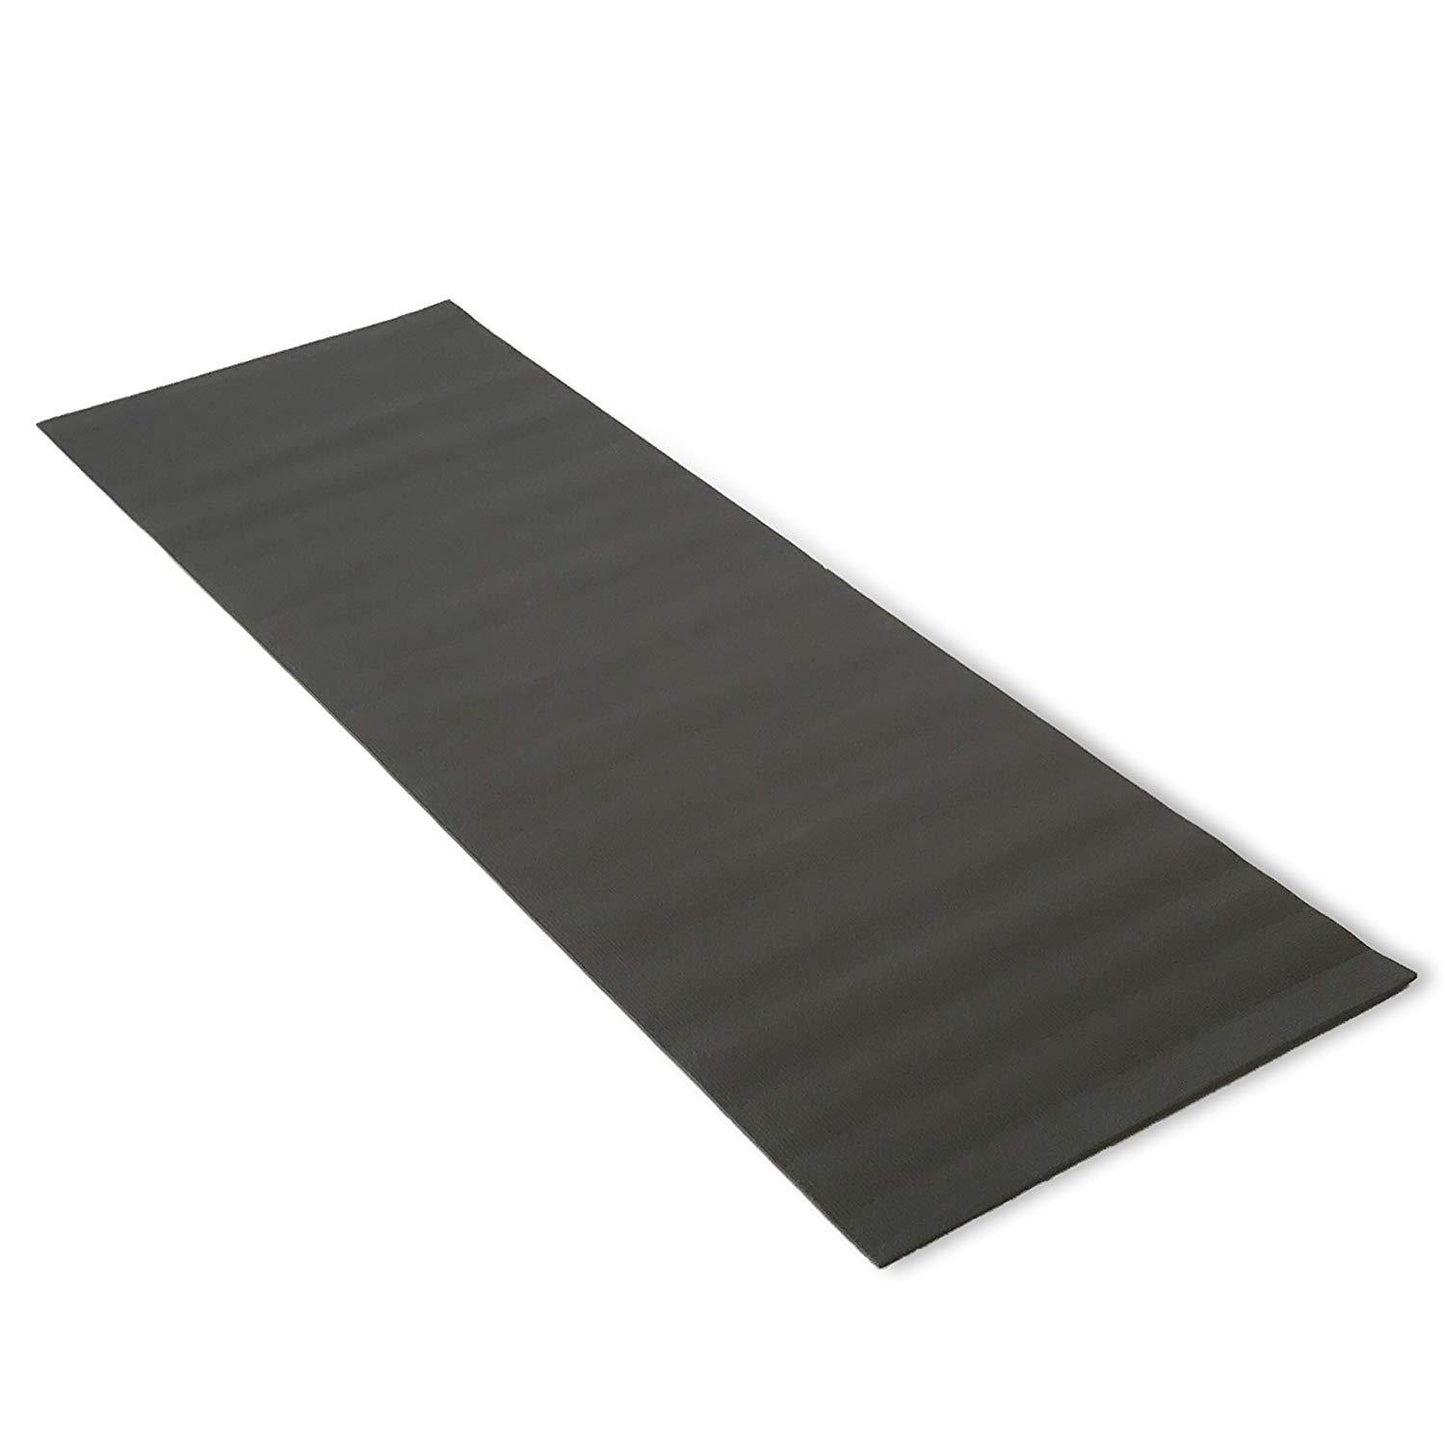 Merrithew 24-in x 72-in Black Antimicrobial Foam Yoga Mat